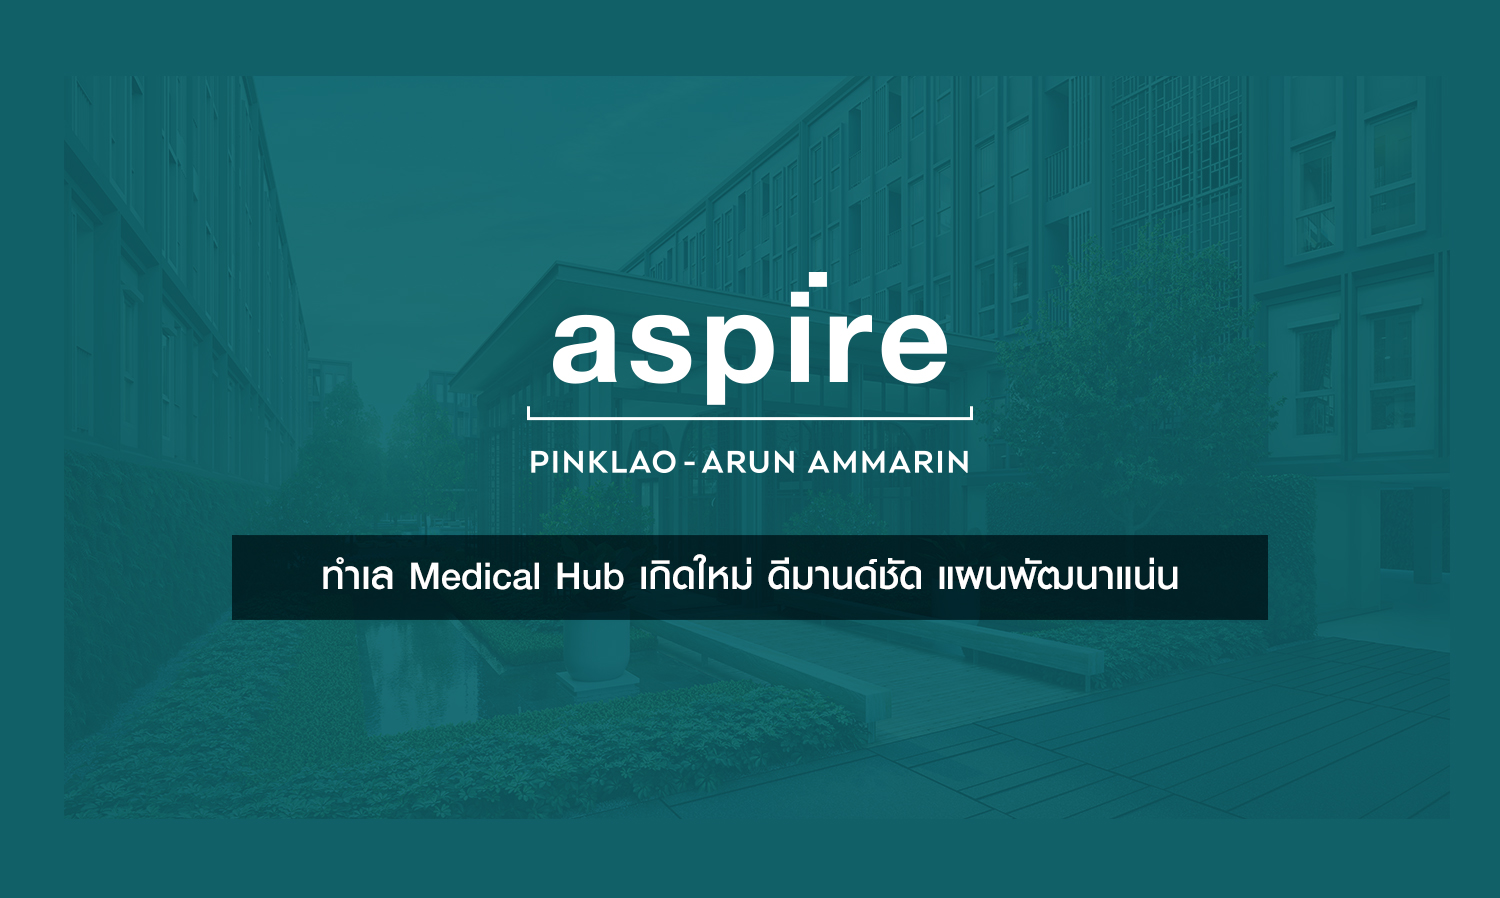 Aspire Pinklao - Arun Ammarin ทำเล Medical Hub เกิดใหม่ ดีมานด์ชัด แผนพัฒนาแน่น